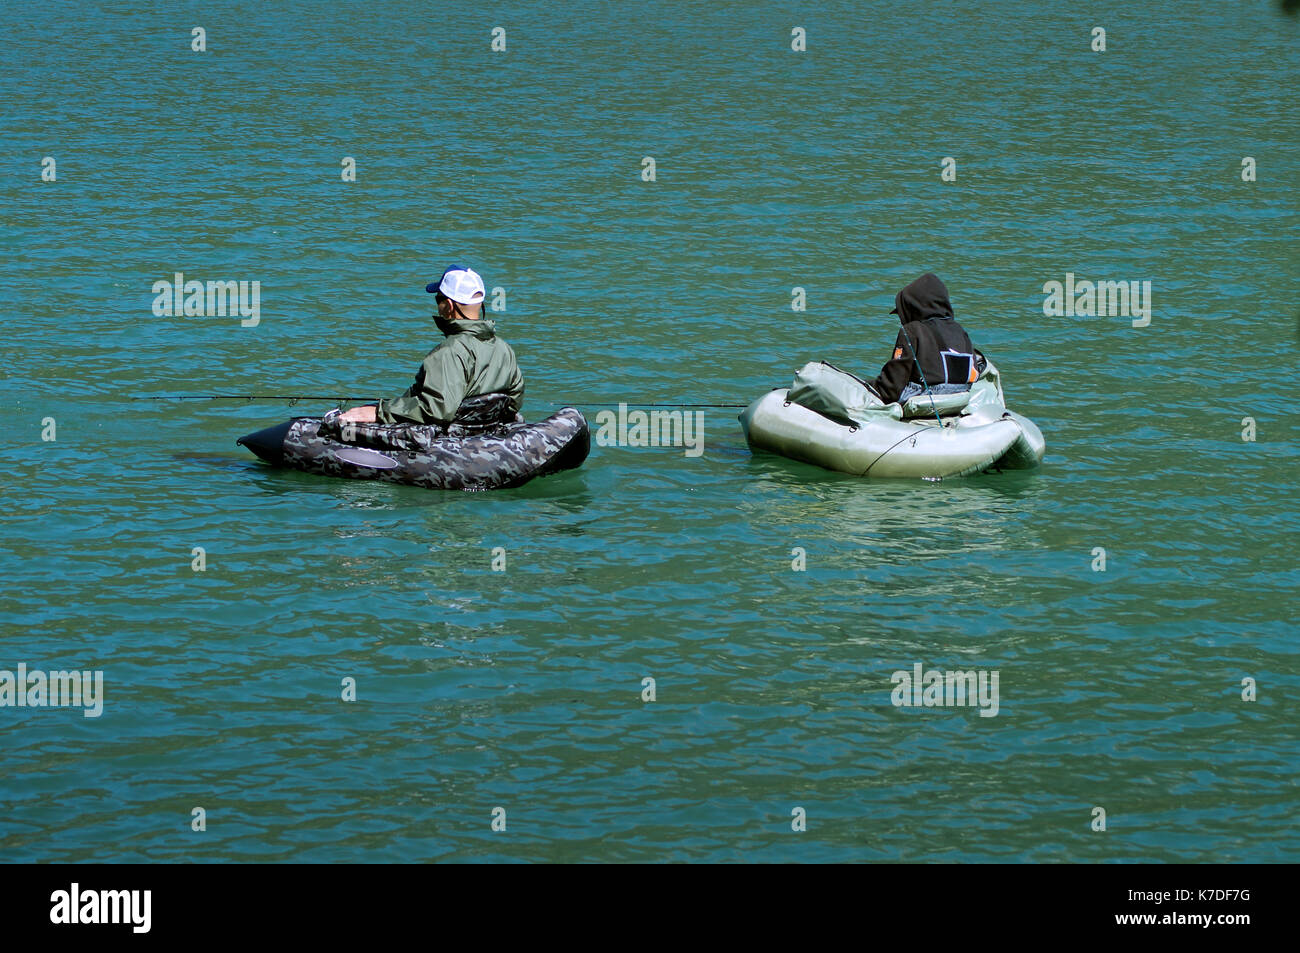 https://c8.alamy.com/comp/K7DF7G/two-fishermen-in-float-tubes-on-a-lake-in-provence-K7DF7G.jpg